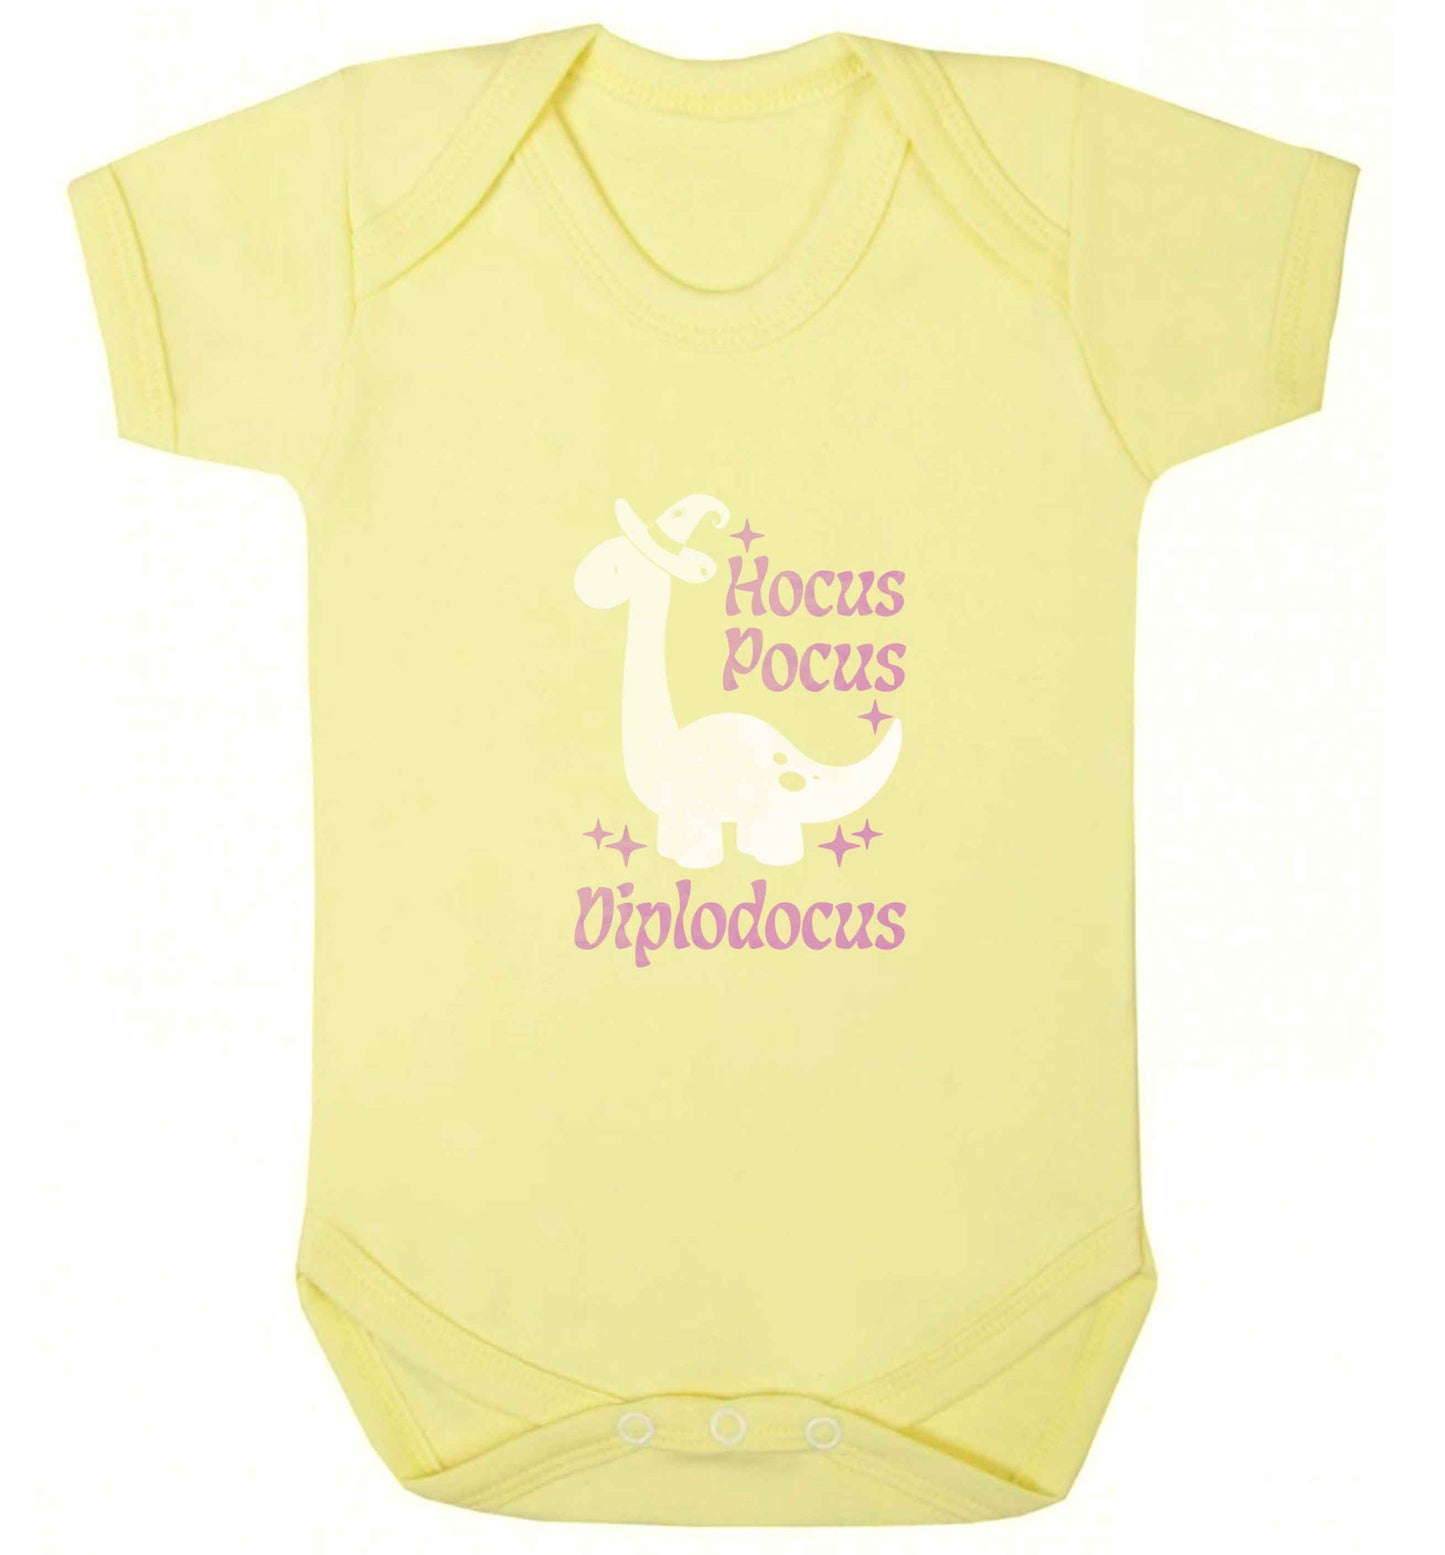 Hocus pocus diplodocus Kit baby vest pale yellow 18-24 months